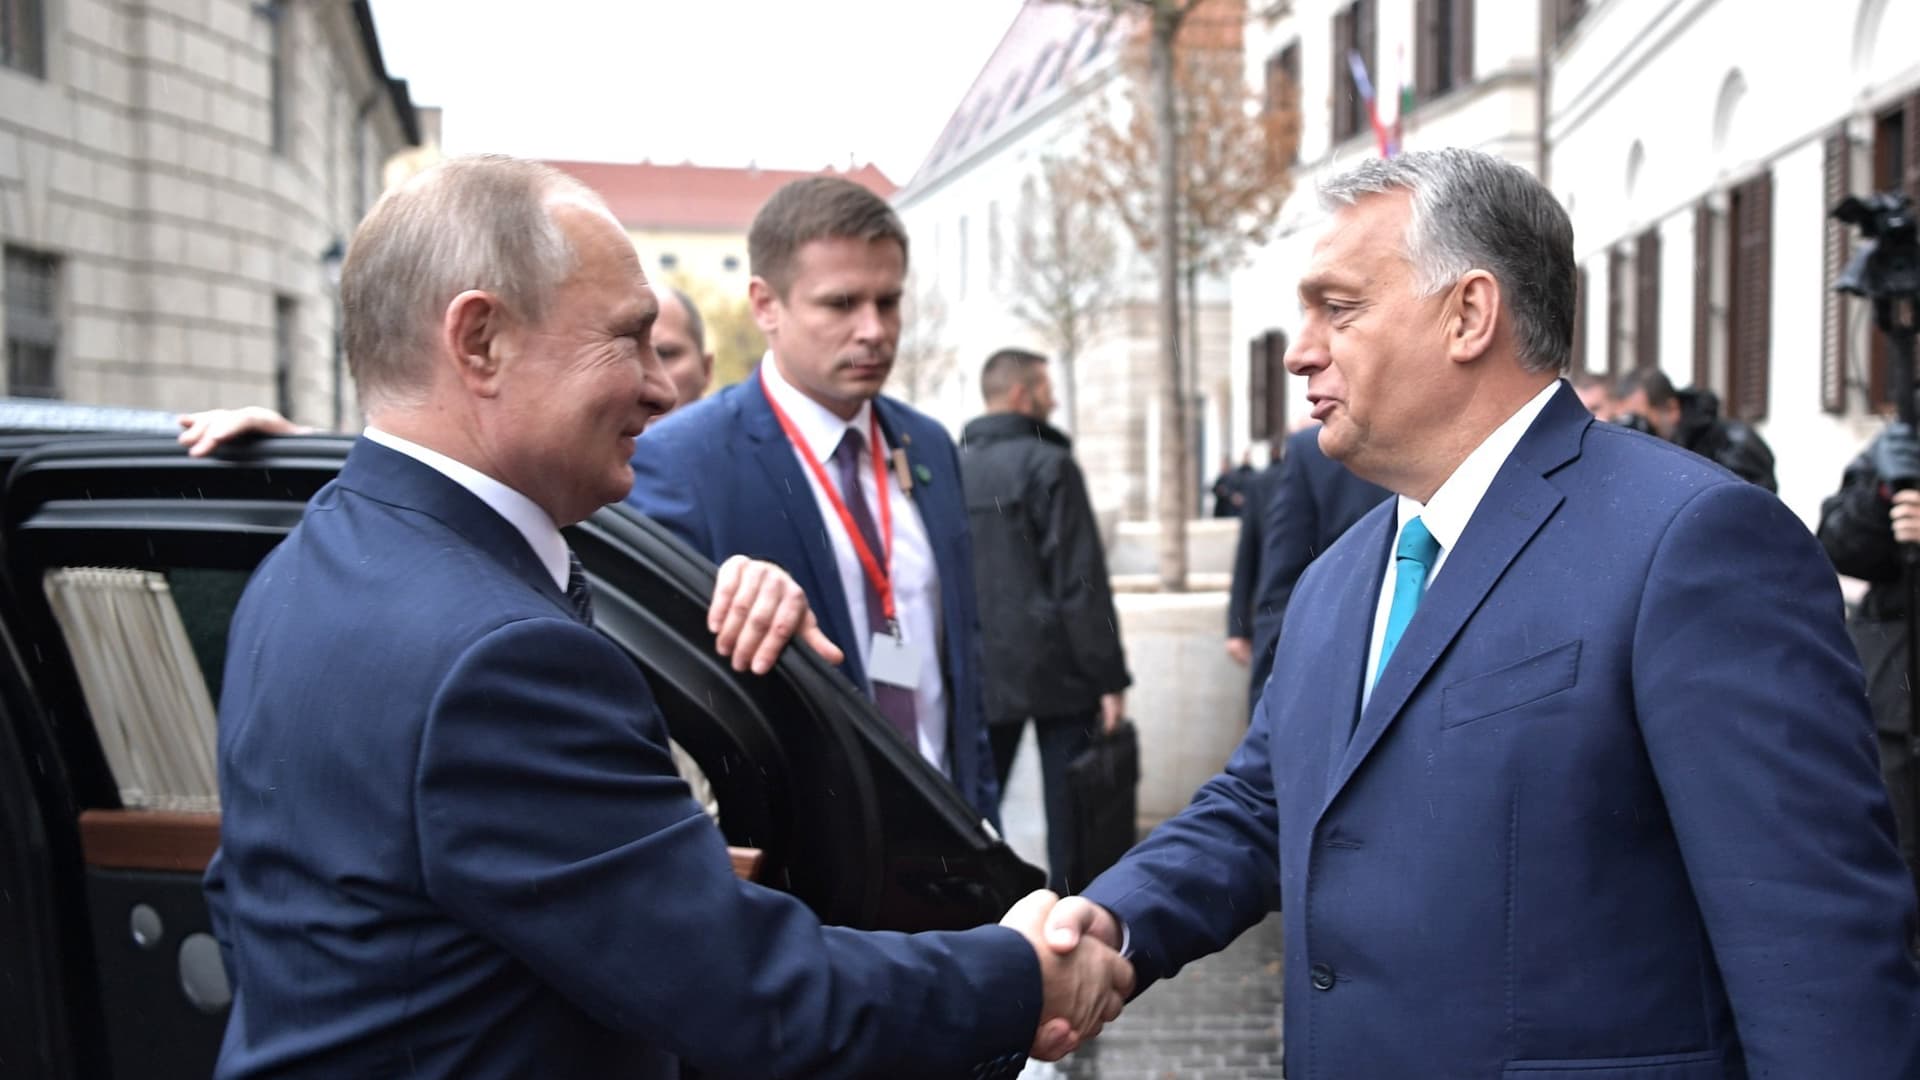 Russian President Vladimir Putin (L) meets Prime Minister of Hungary, Viktor Orban (R) in Budapest, Hungary on October 30, 2019.